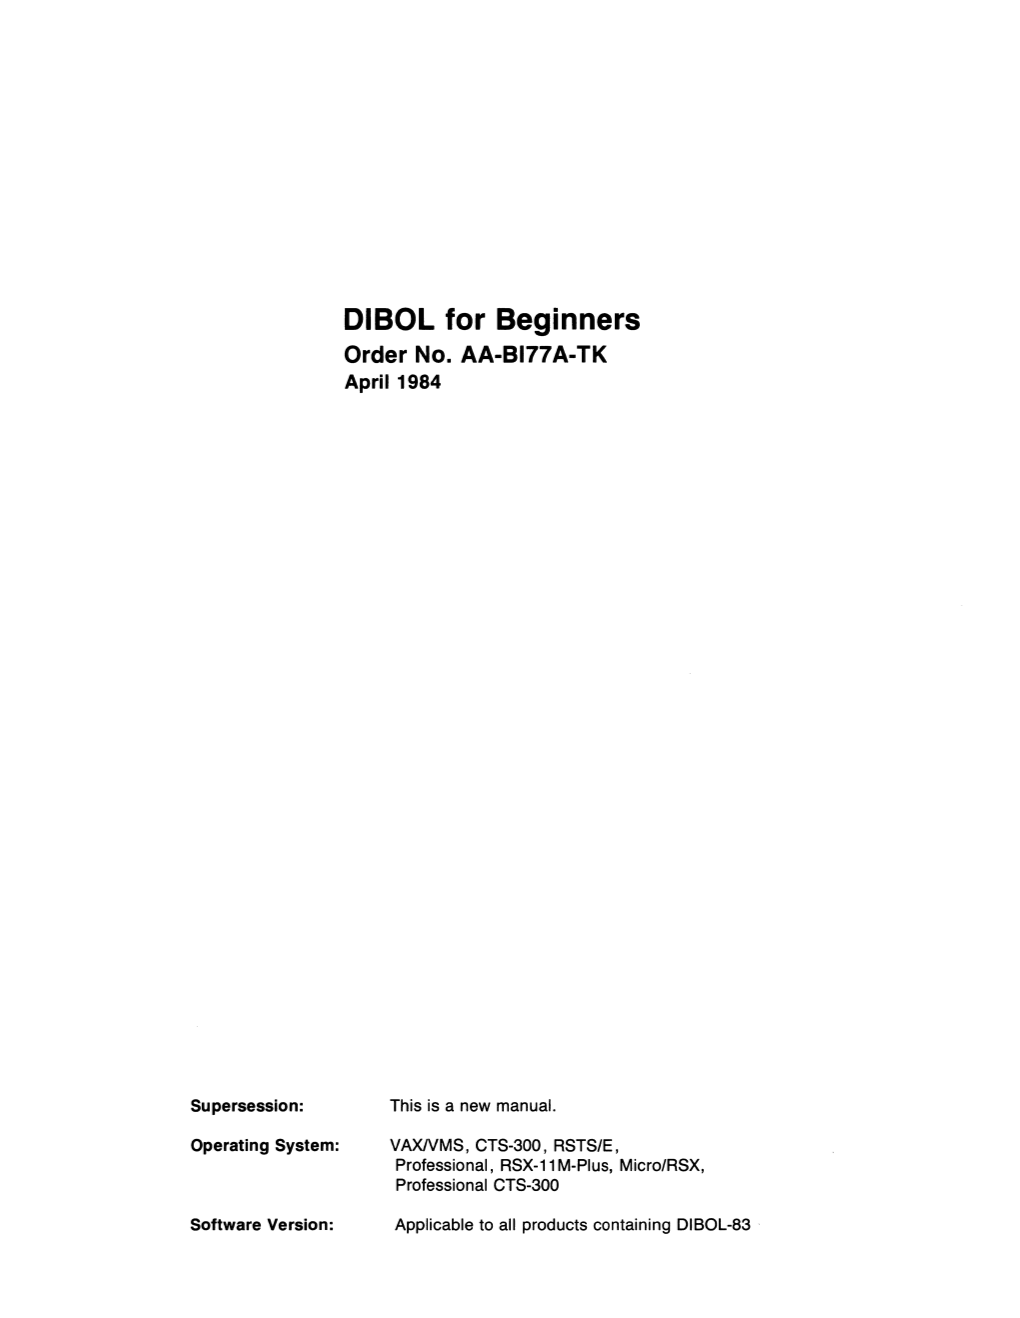 DIBOL for Beginners Order No